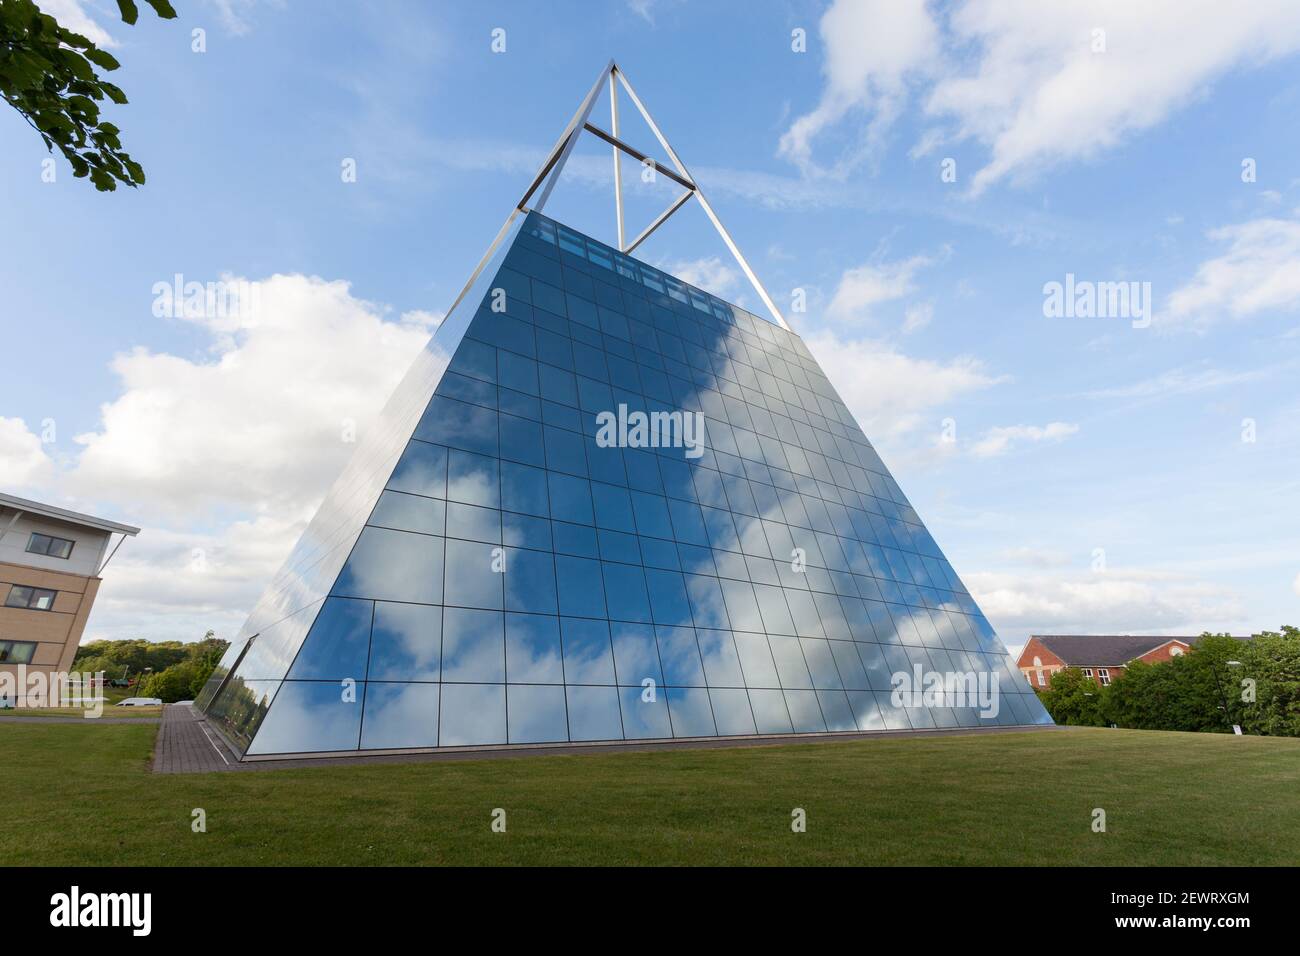 The Inspire Pyramid at Hornbeam Park, Harrogate - a glass pyramid shaped office building Stock Photo